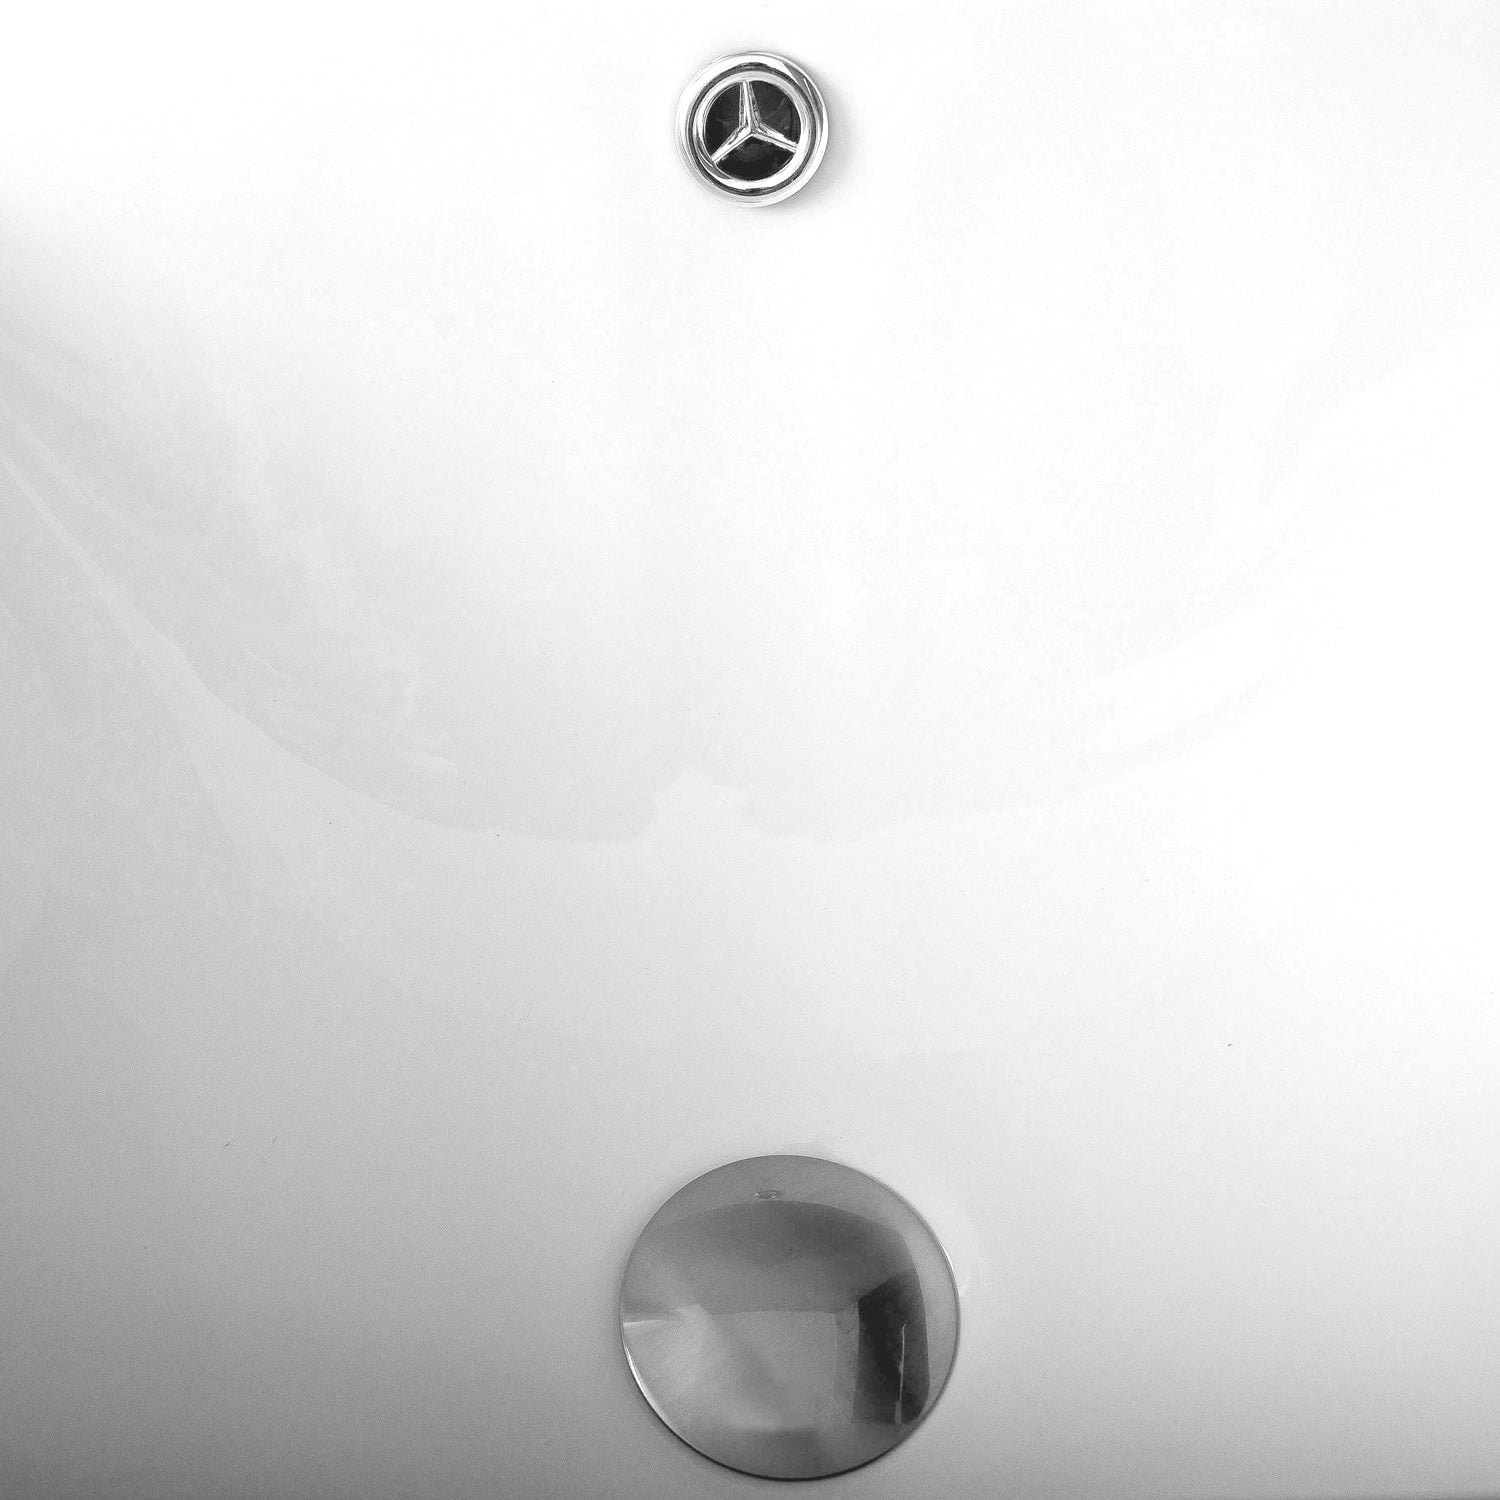 DAX Ceramic Square Single Bowl Undermount Bathroom Sink, White Finish, 18-1/2 x 13-1/2 x 8-1/16 Inches (BSN-202C-W)